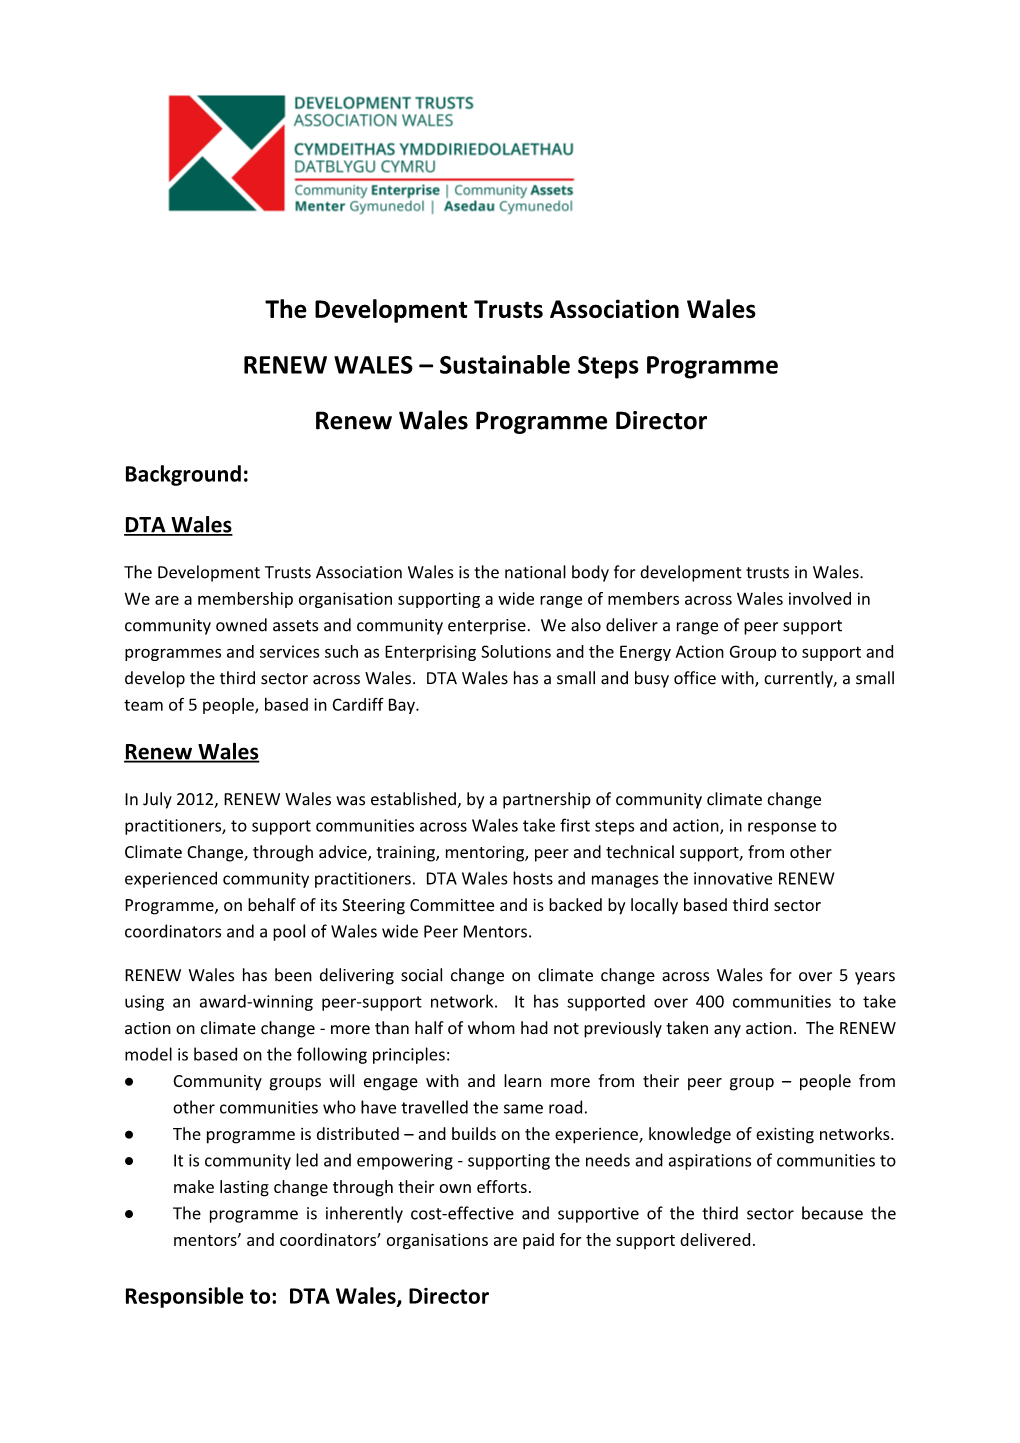 The Development Trusts Association Wales